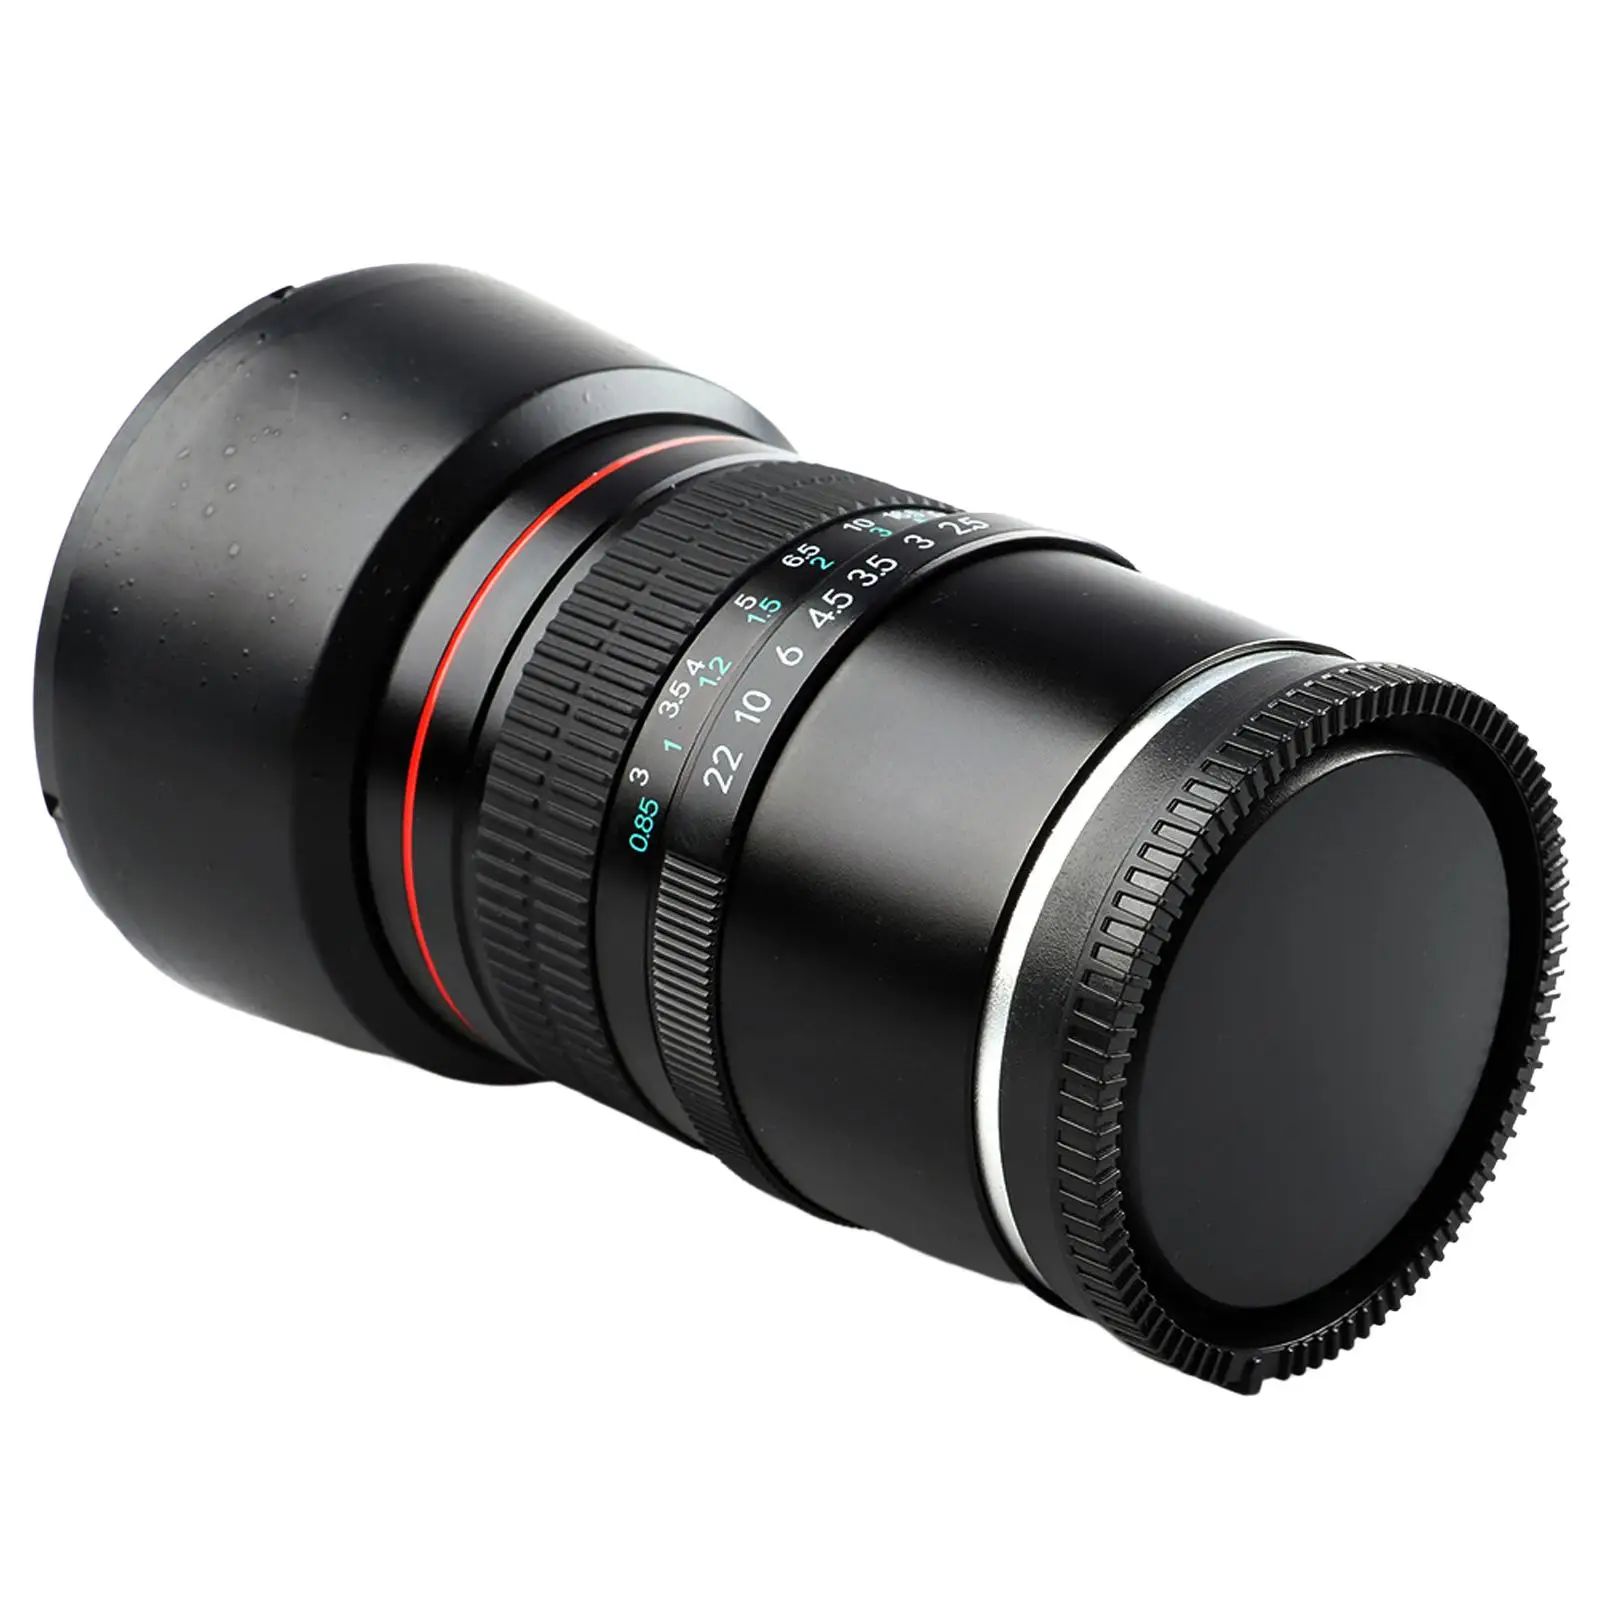 85mm 1.8 E buckle lens Medium Telephoto Full Frame Manual Lens Lightweight Fixed Lens for A9  A7S A7 A6500 A6300 A6000 Cameras